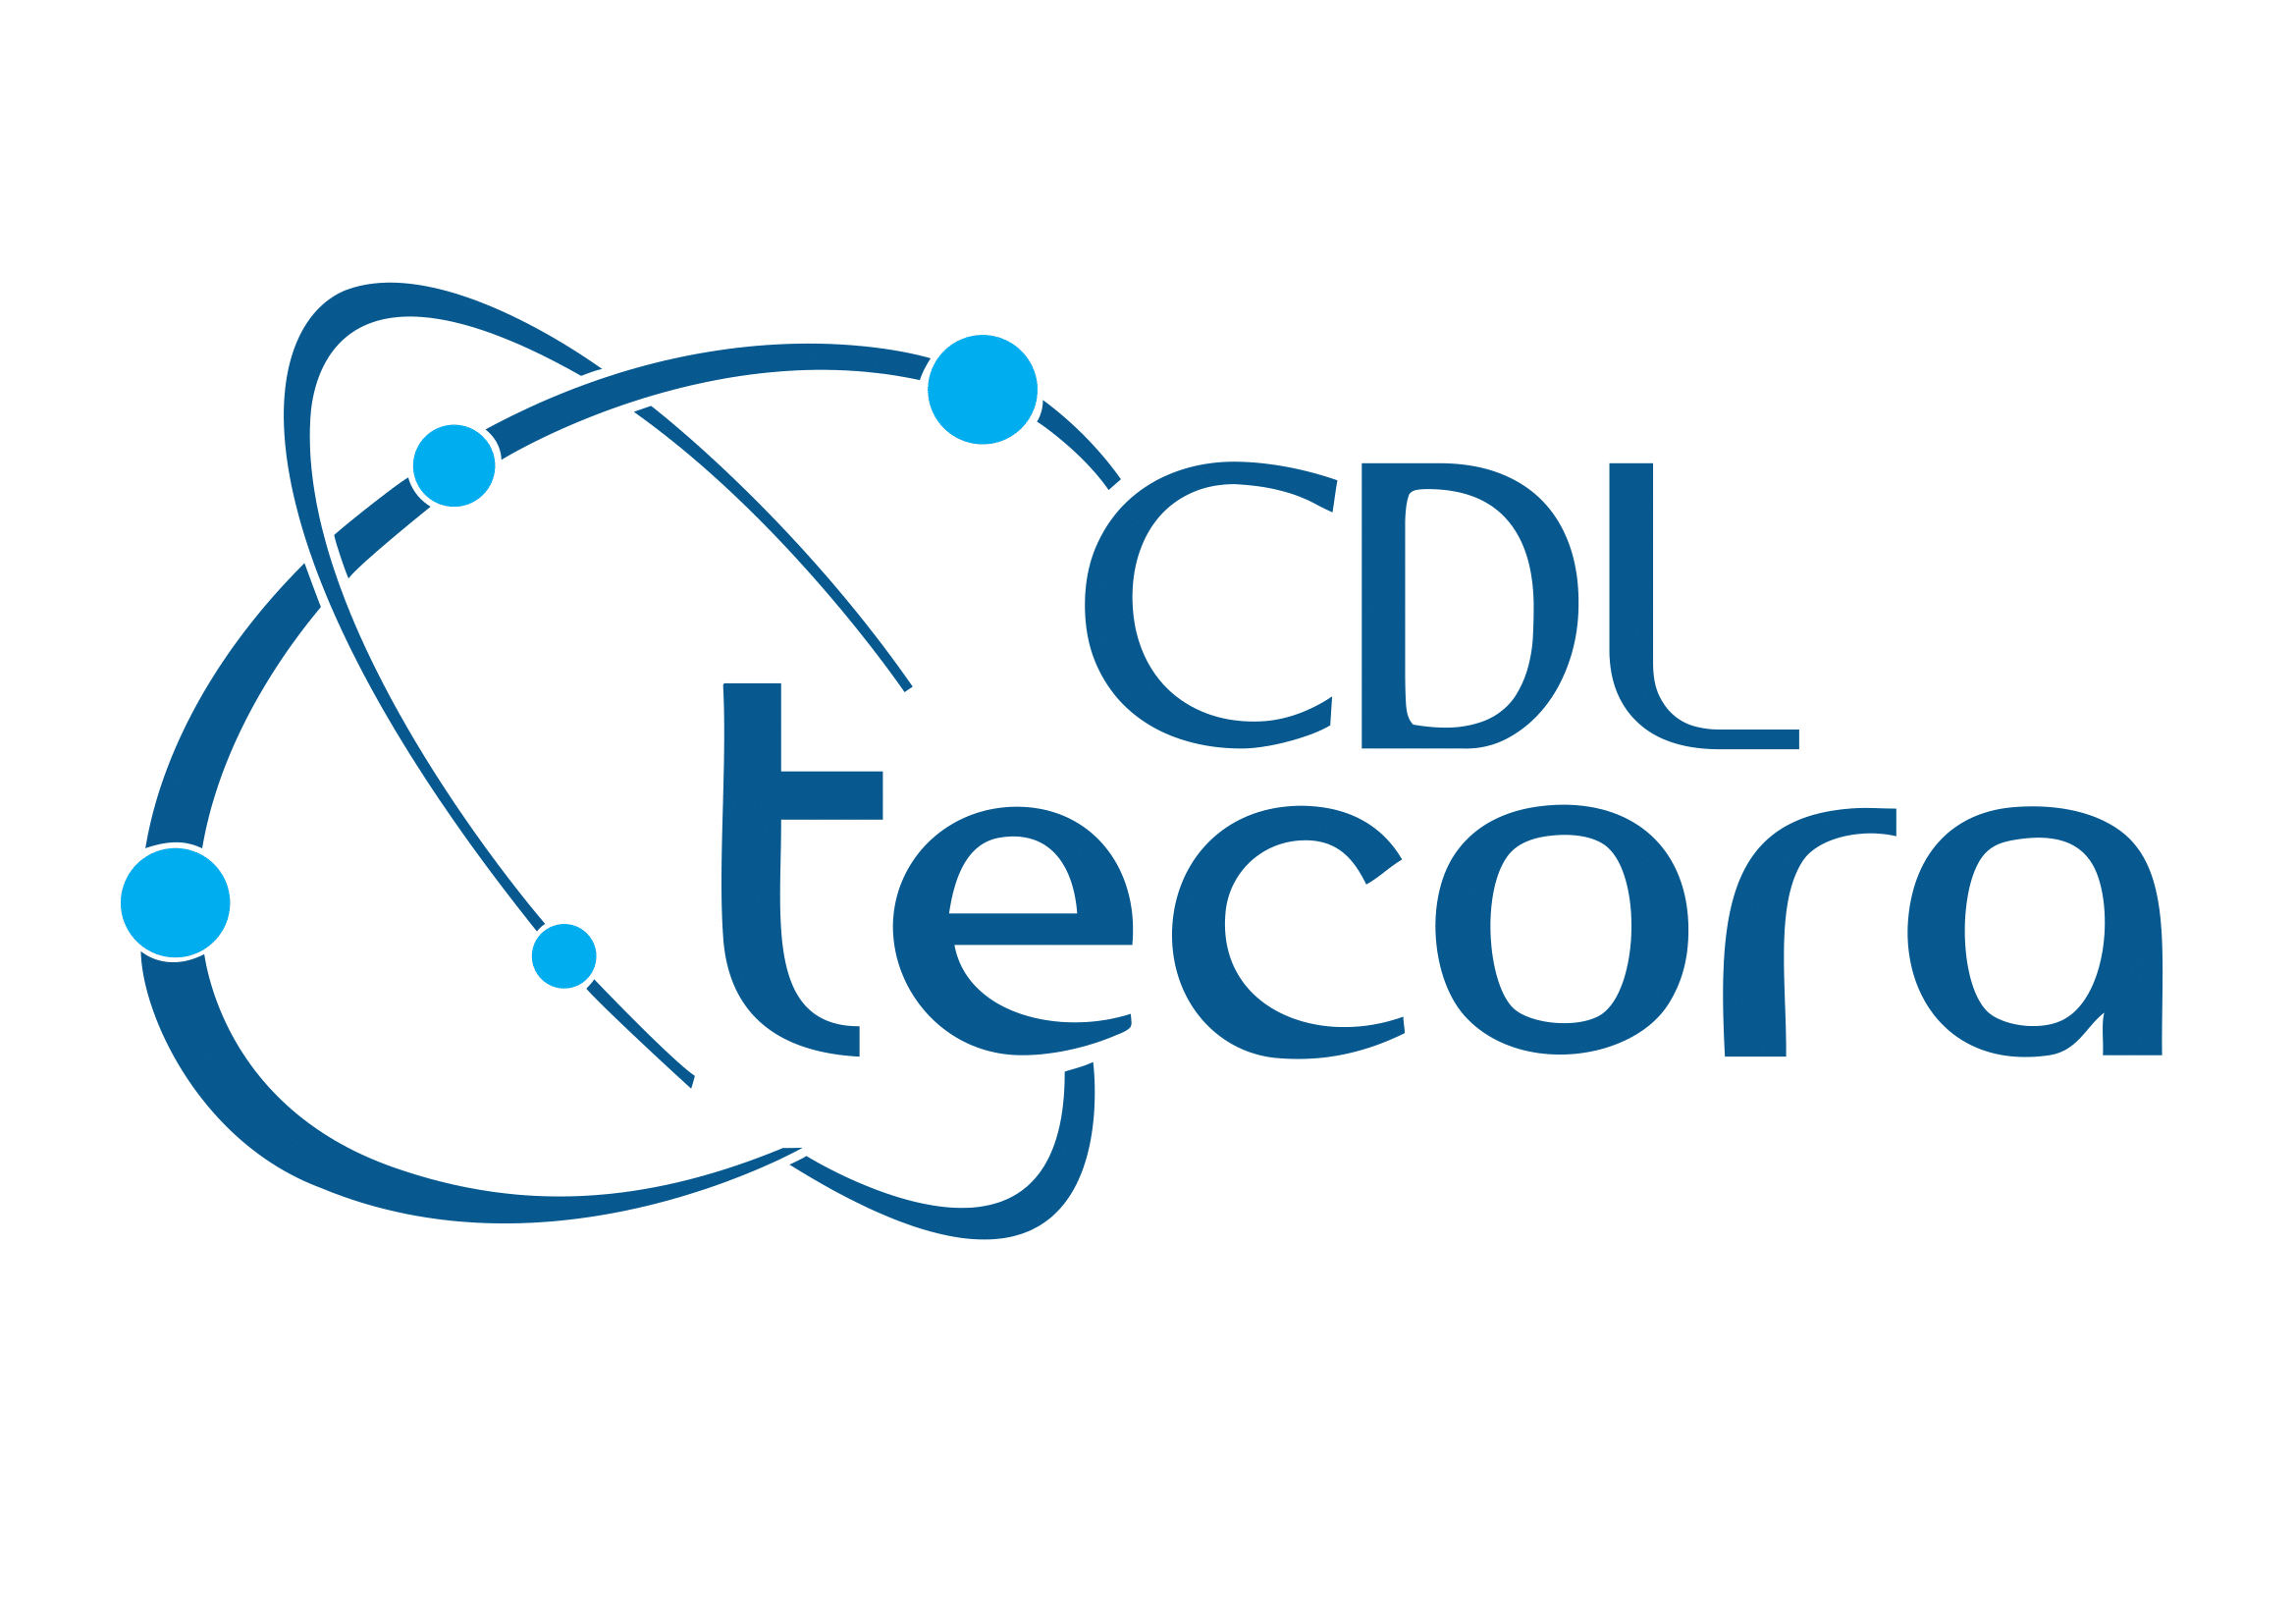 CDL-TECORA